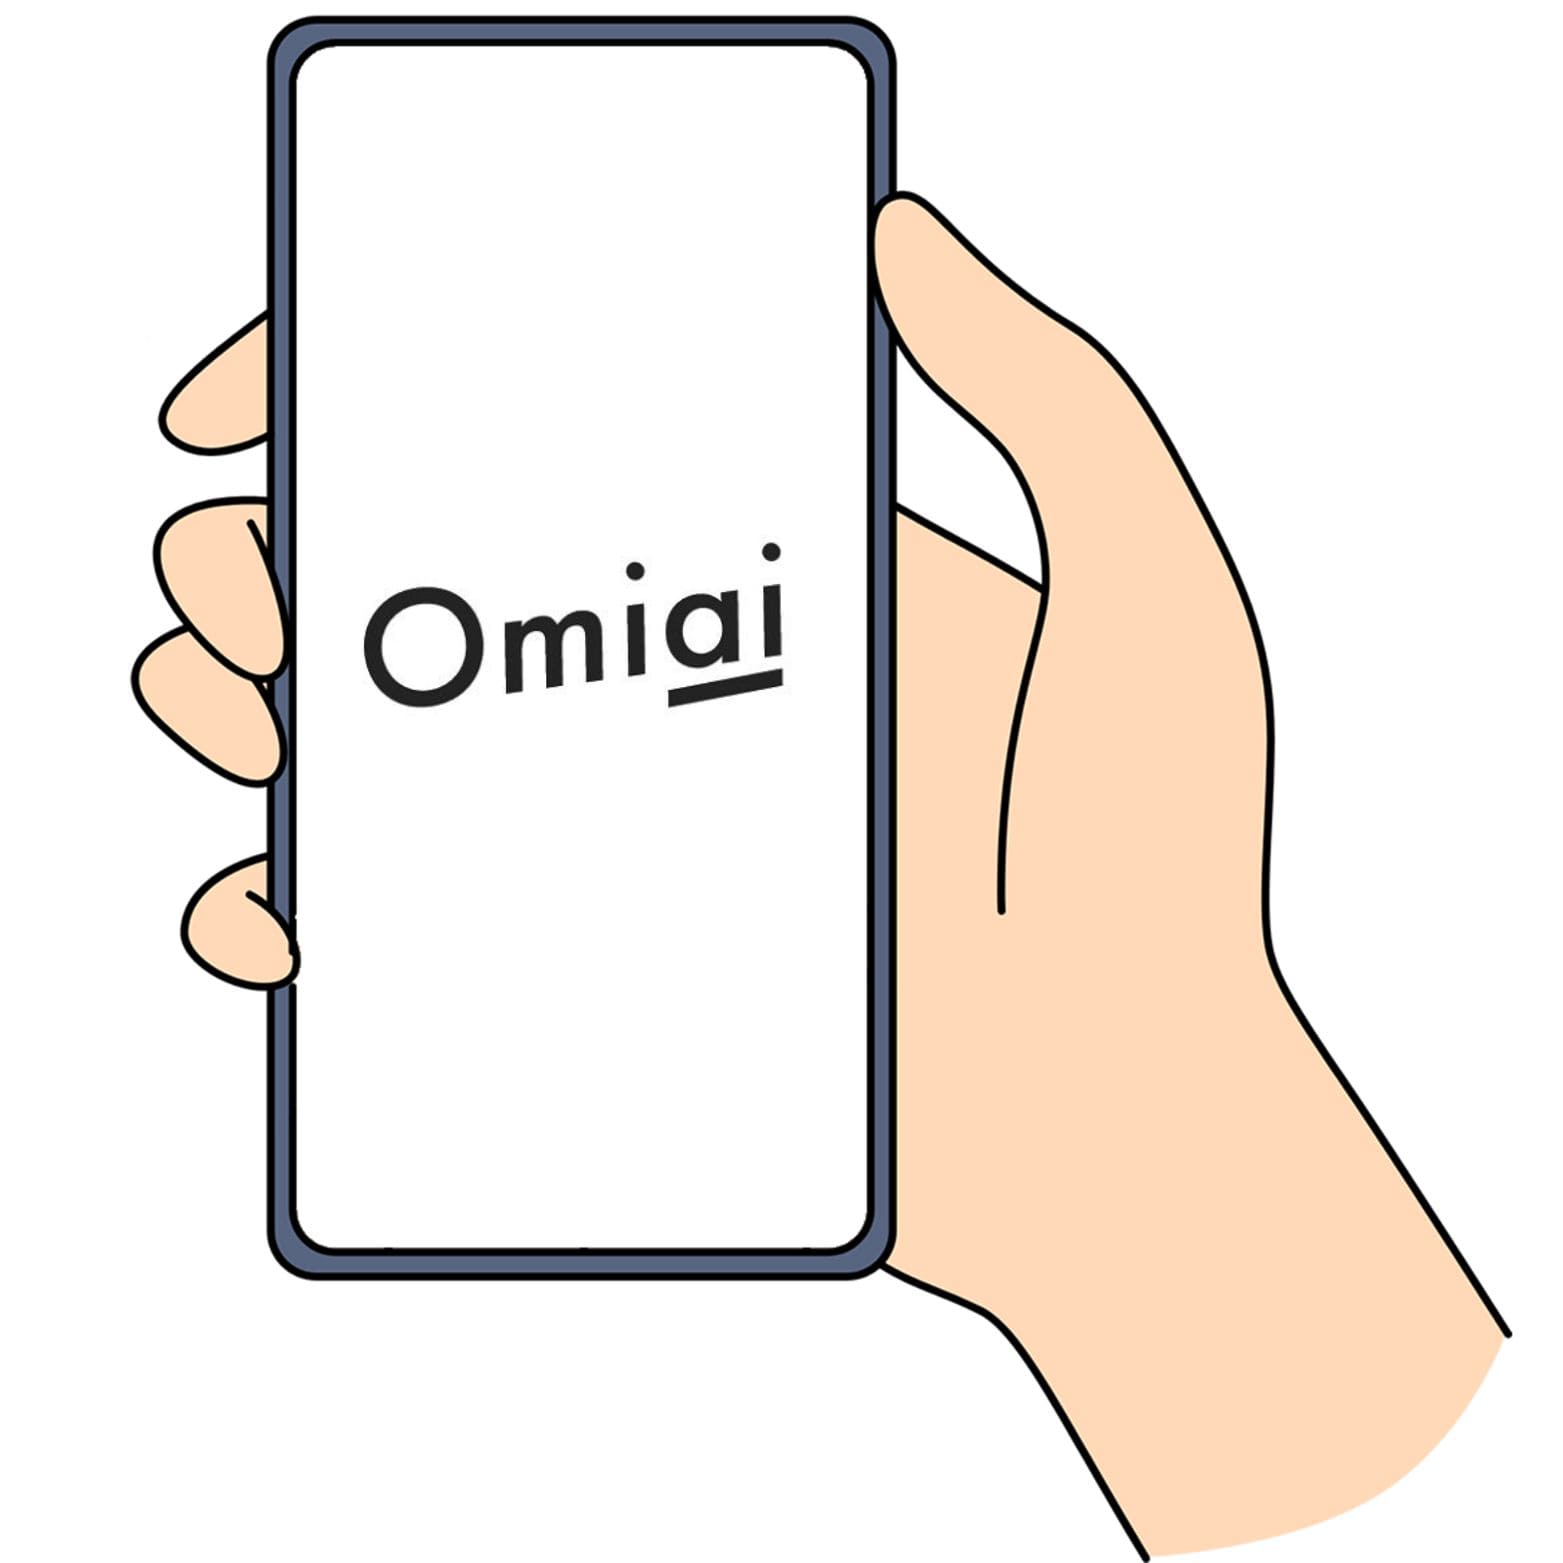 Omiaiの公式ウェブサイトにアクセスしてログイン